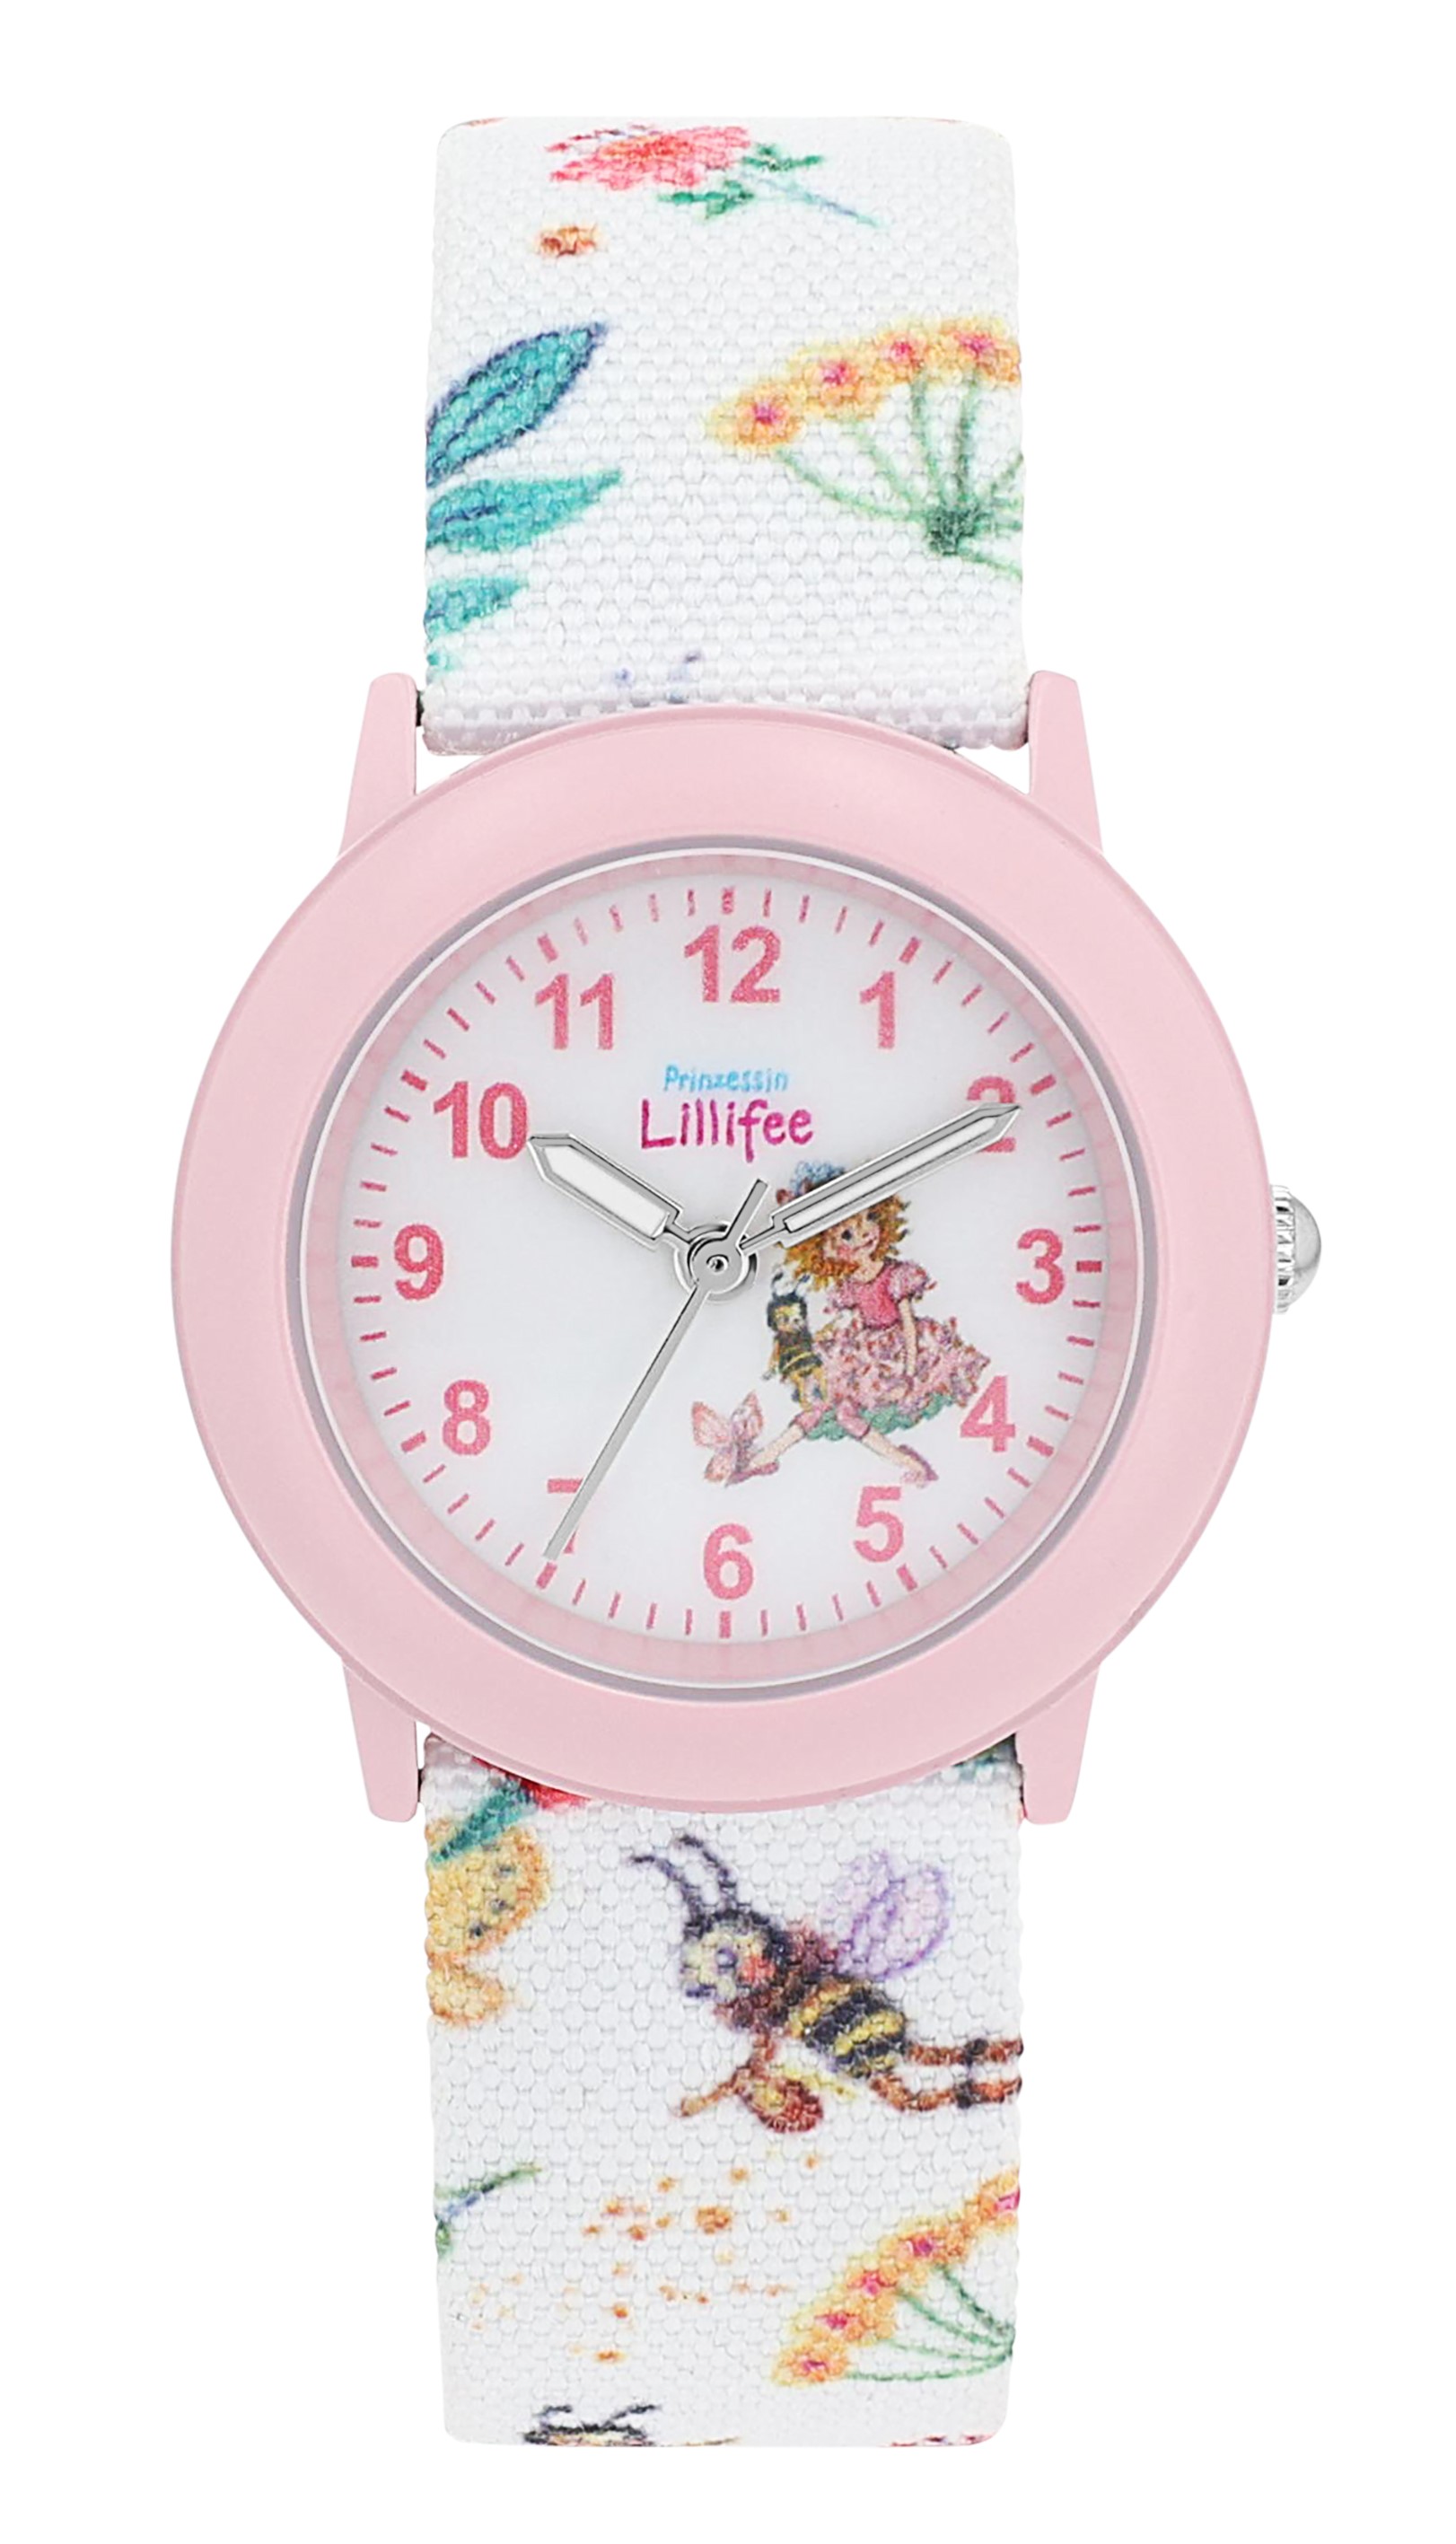 Prinzessin Lillifee Mädchen Armbanduhr 2037724 Textilband Tier- und Naturmotive rosa